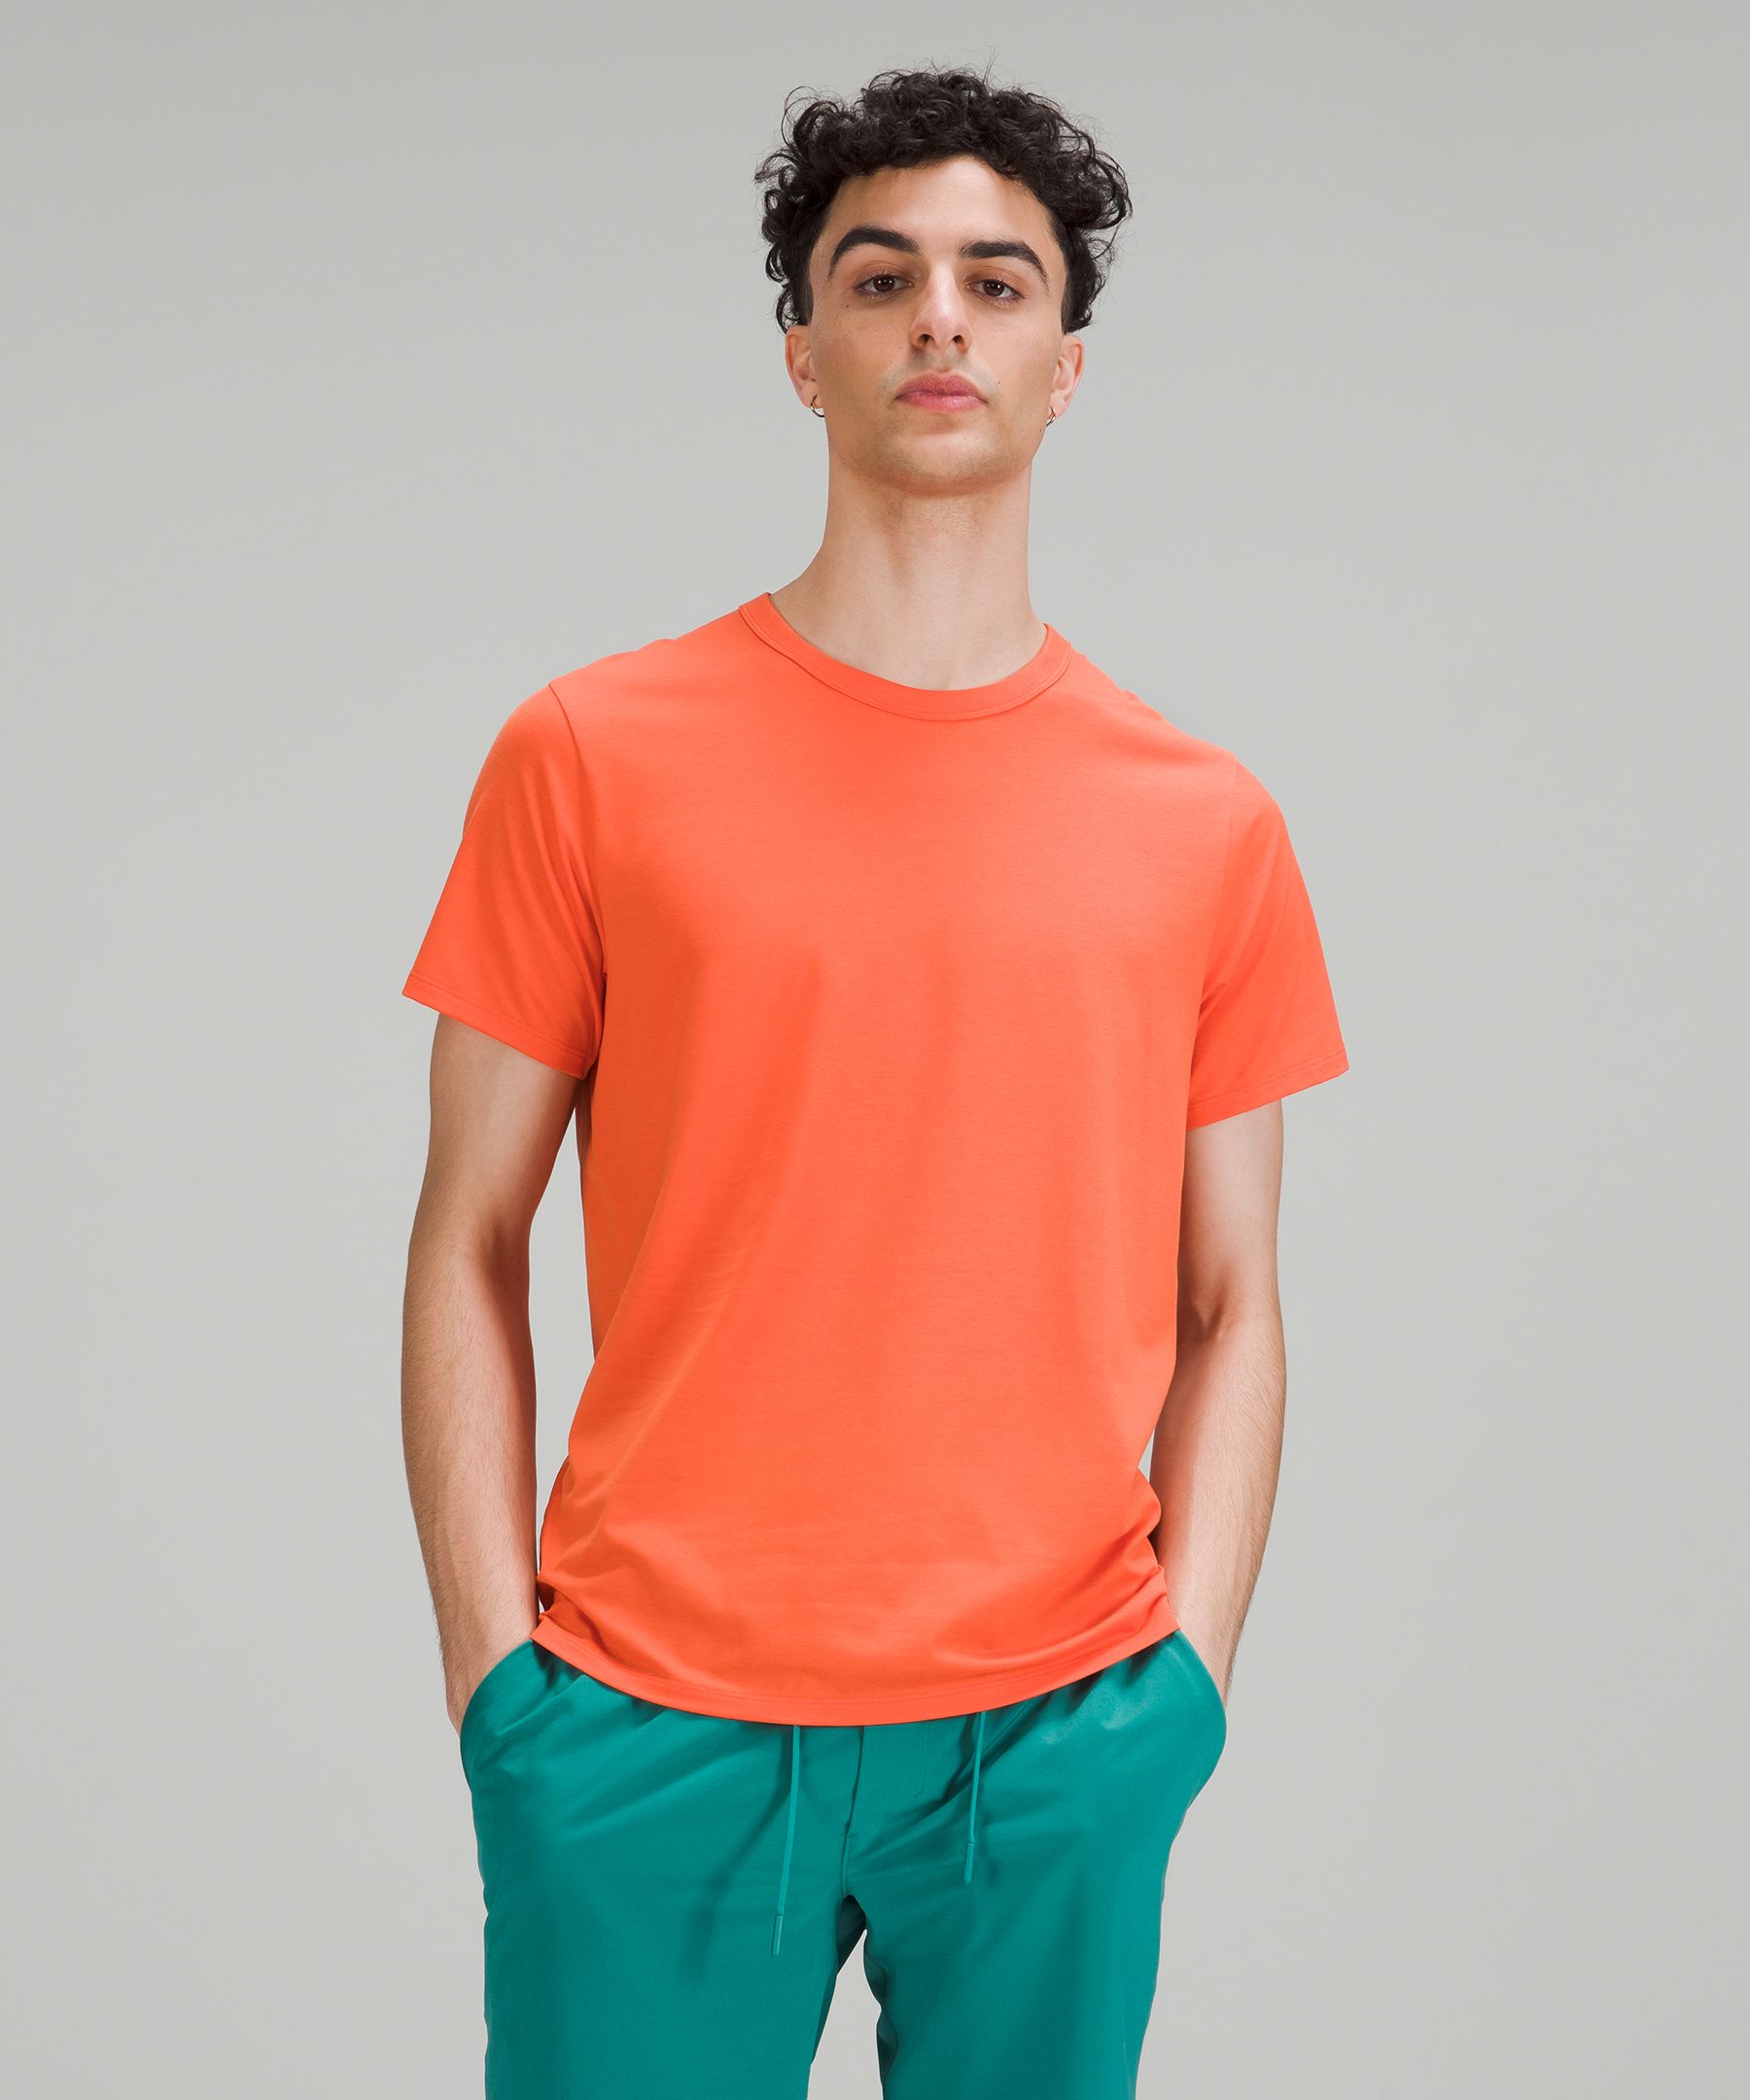 Lululemon The Fundamental T-shirt In Orange